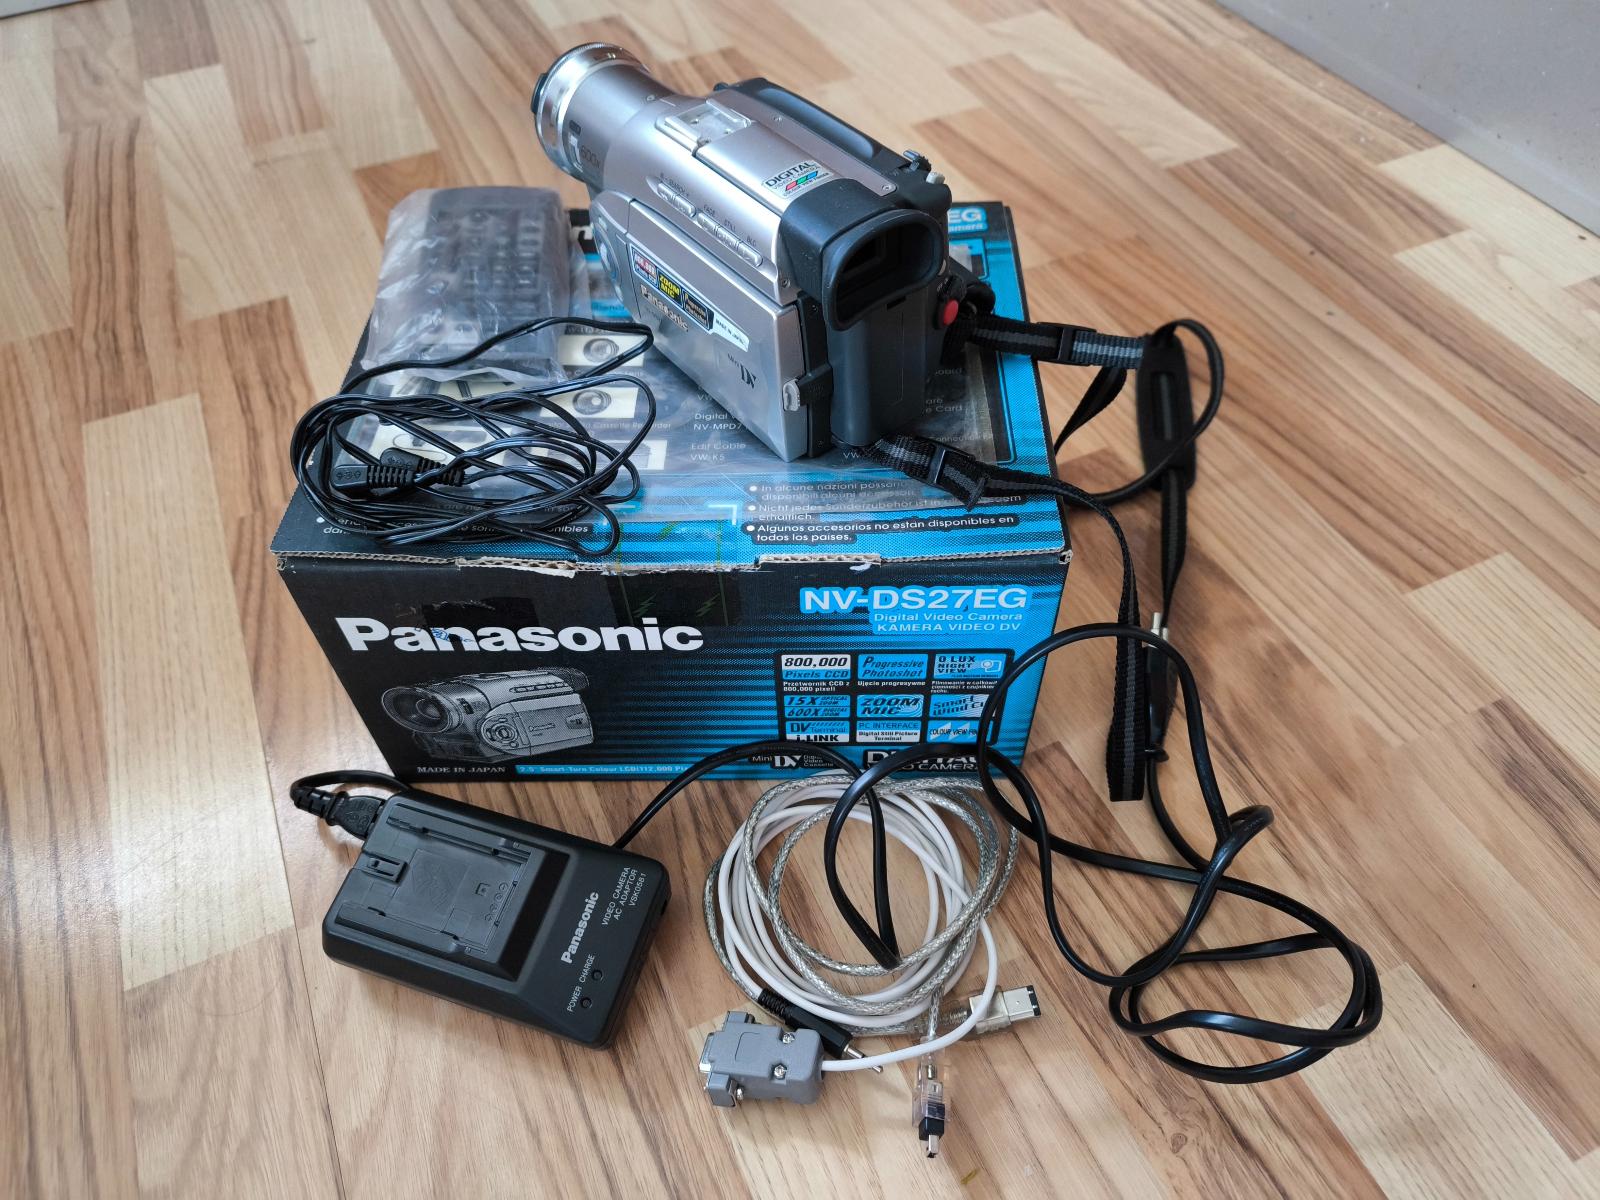 Kamera Panasonic NV-DS27EG - TV, audio, video